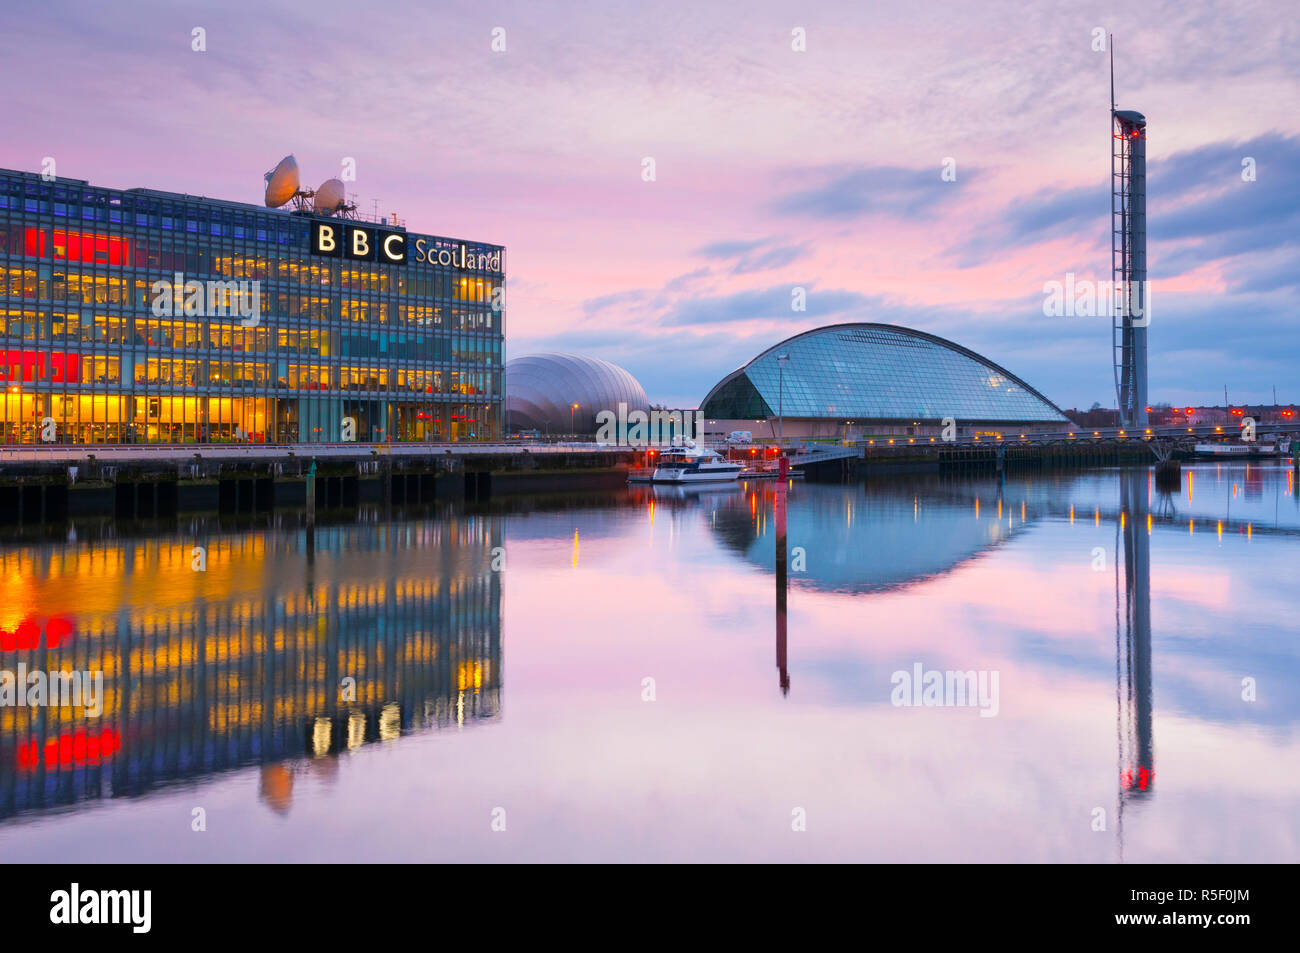 UK, Scotland, Glasgow, BBC Scotland Headquarters, Glasgow Science Centre and Glasgow Tower on River Clyde Stock Photo